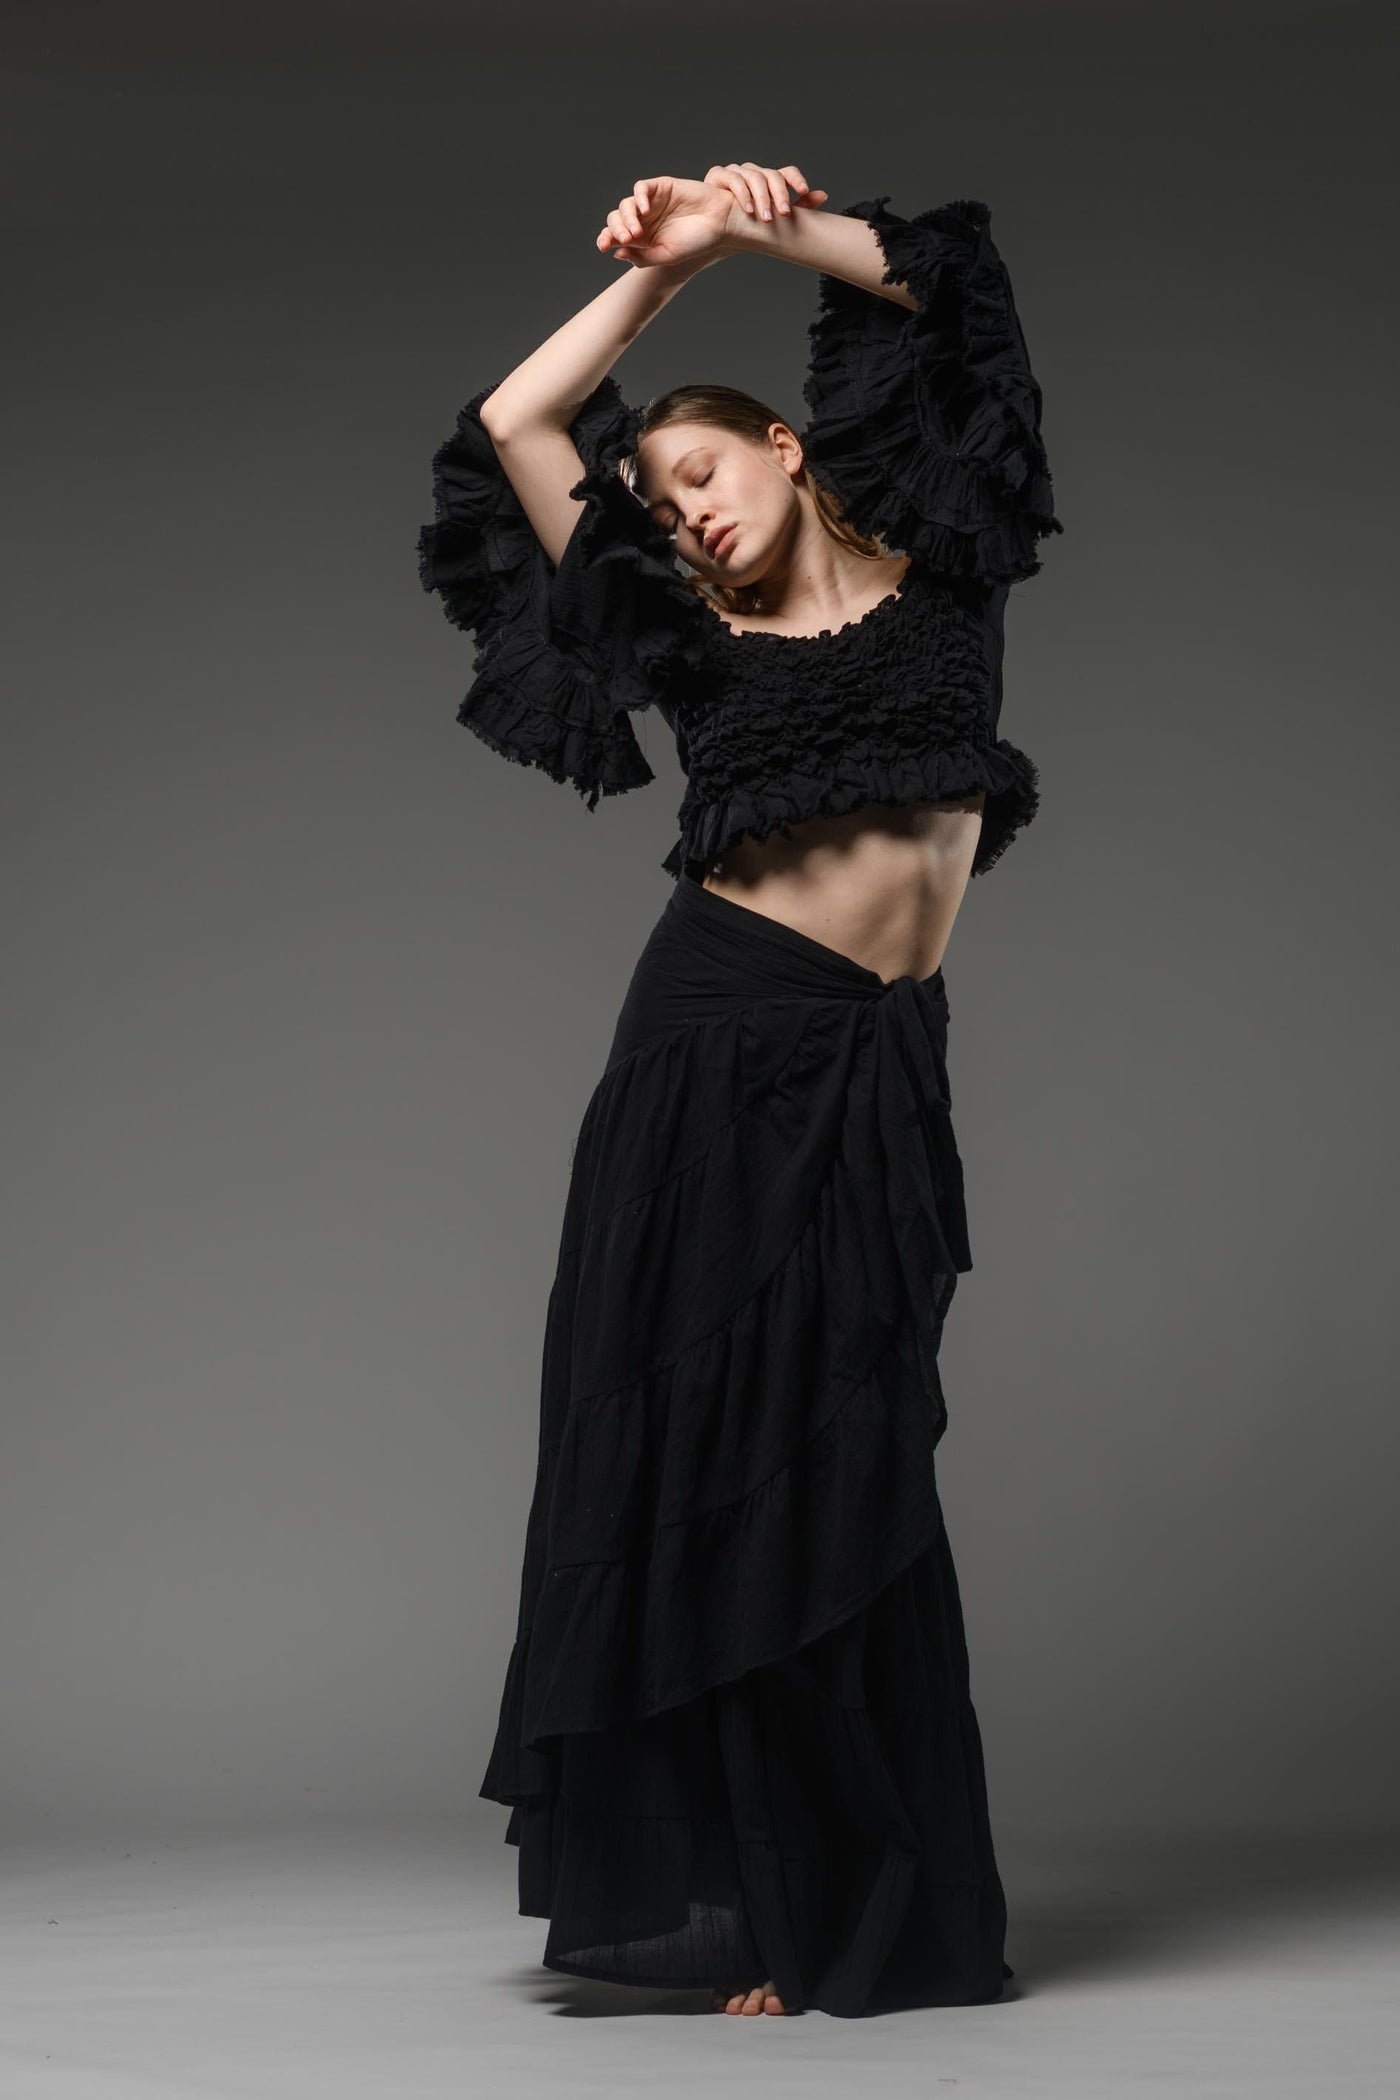 Bohemian gypsy fashion black cotton wide ruffled sleeve smocked top crop